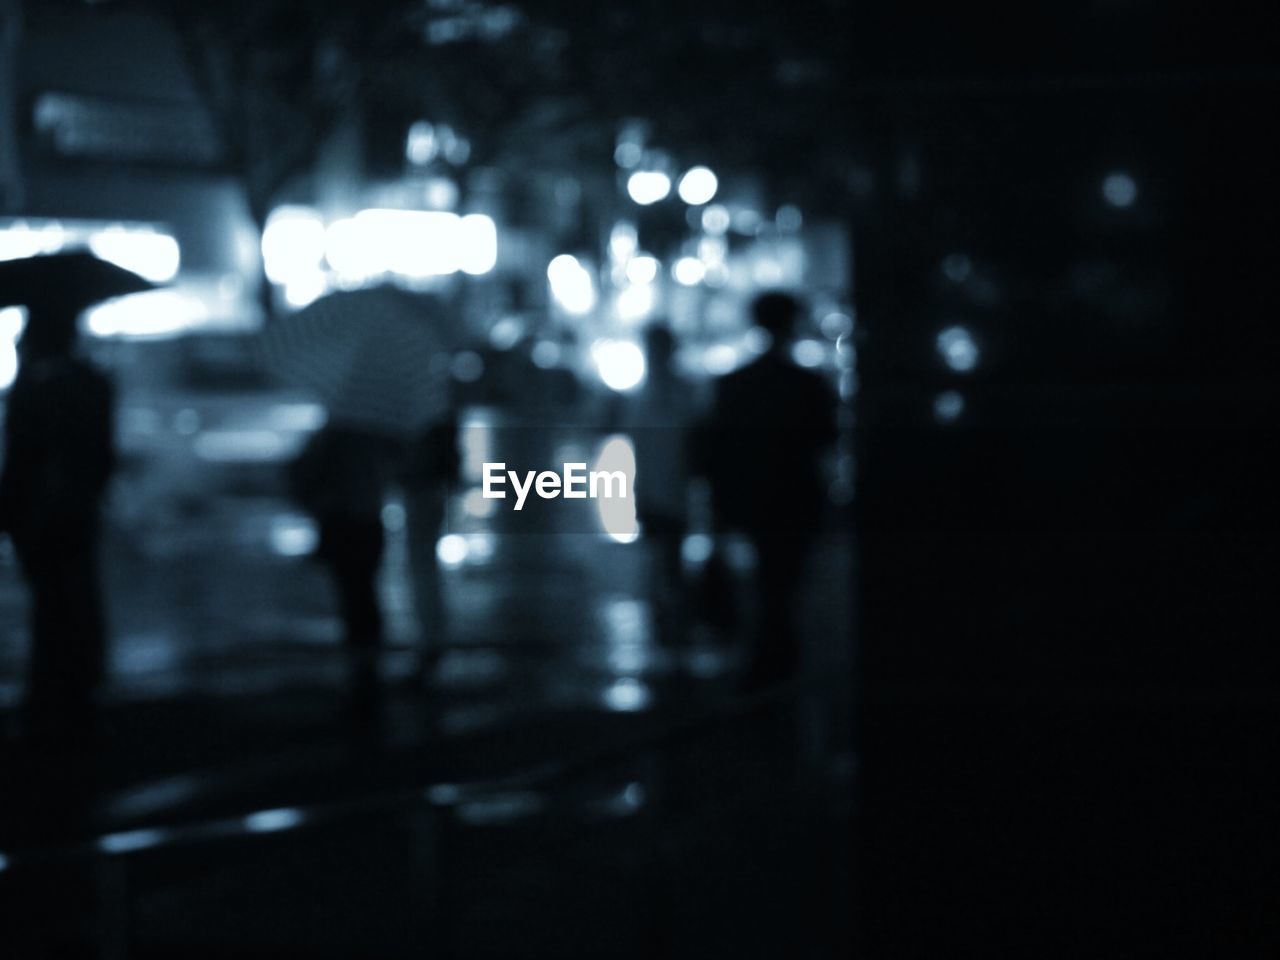 Blurred image of silhouette people walking on street